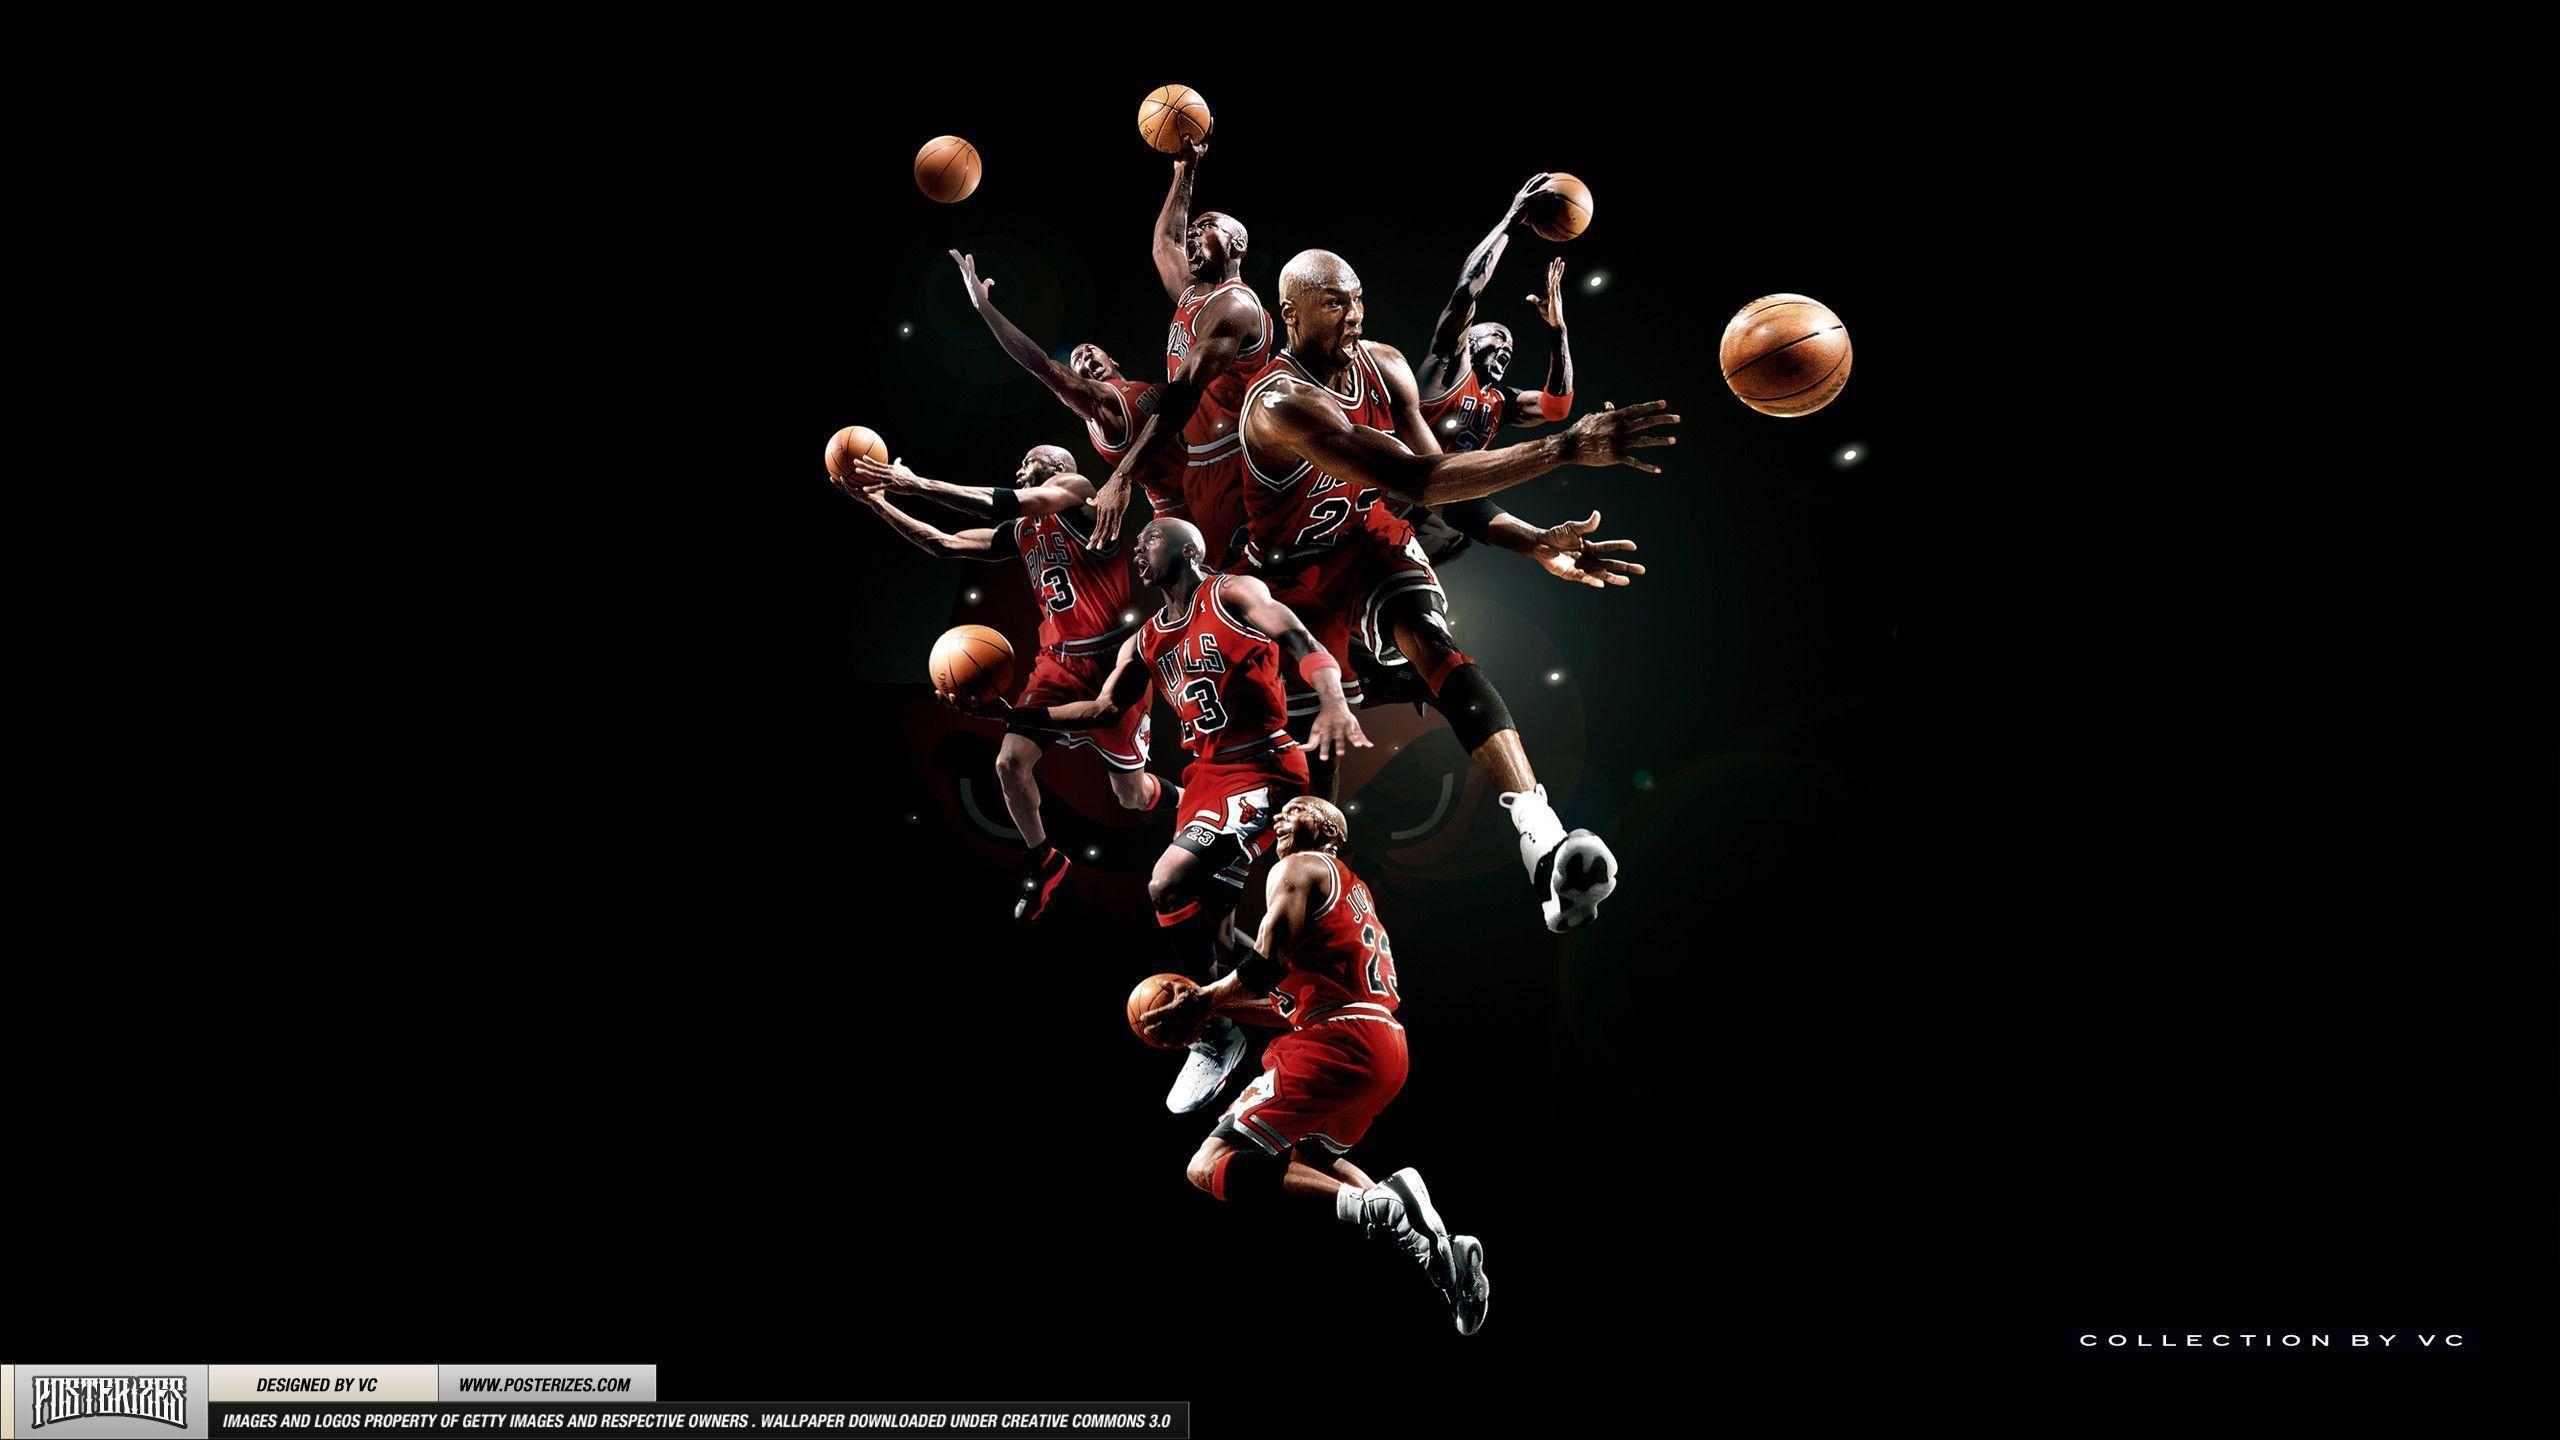 Michael Jordan Logo 46 117014 Image HD Wallpaper. Wallfoy.com